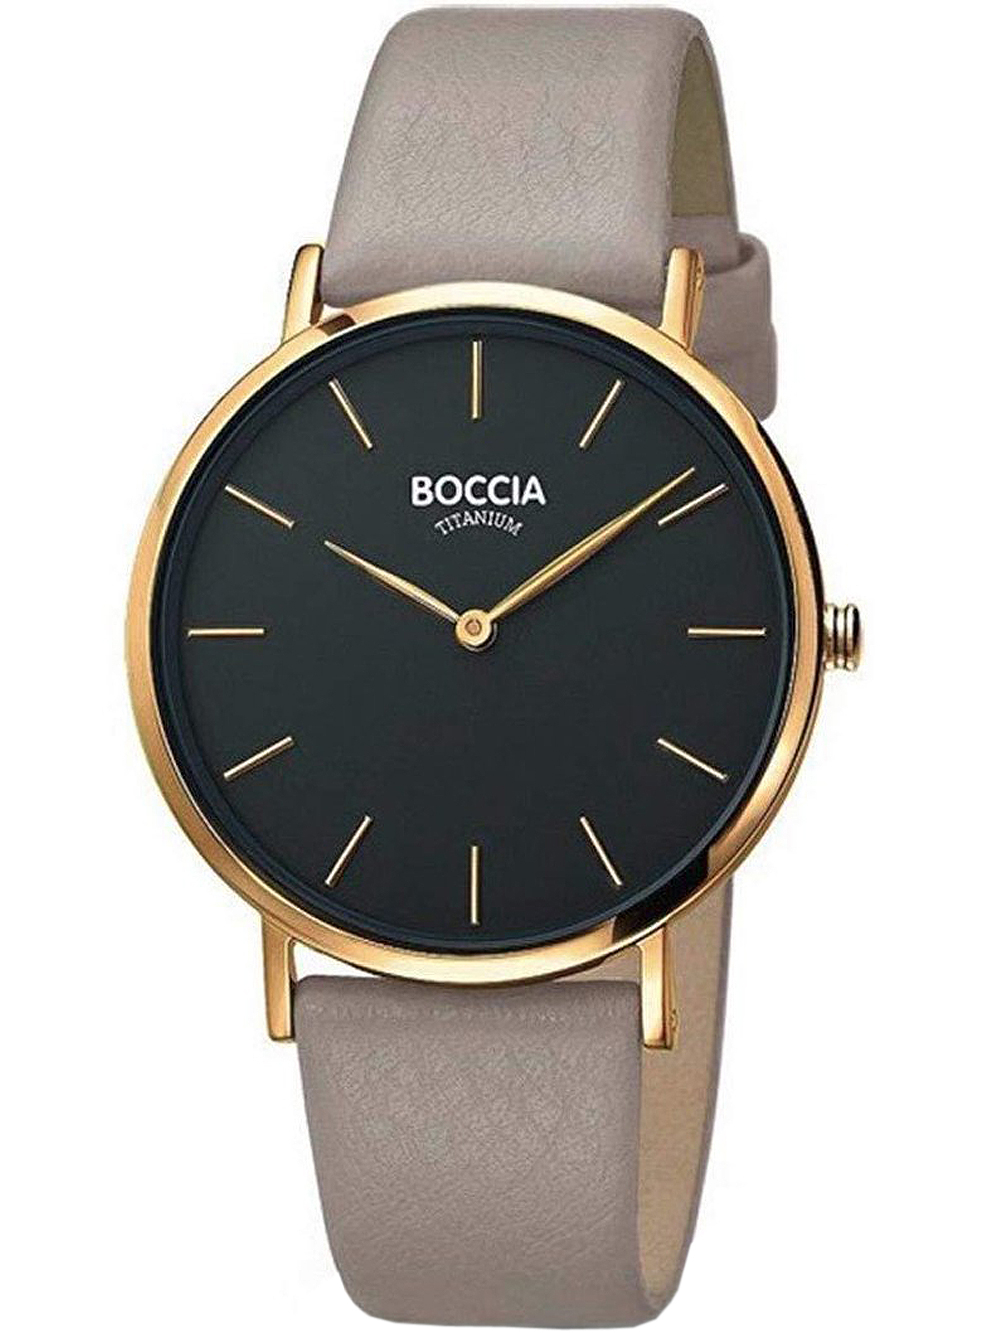 Dámské hodinky Boccia 3273-04